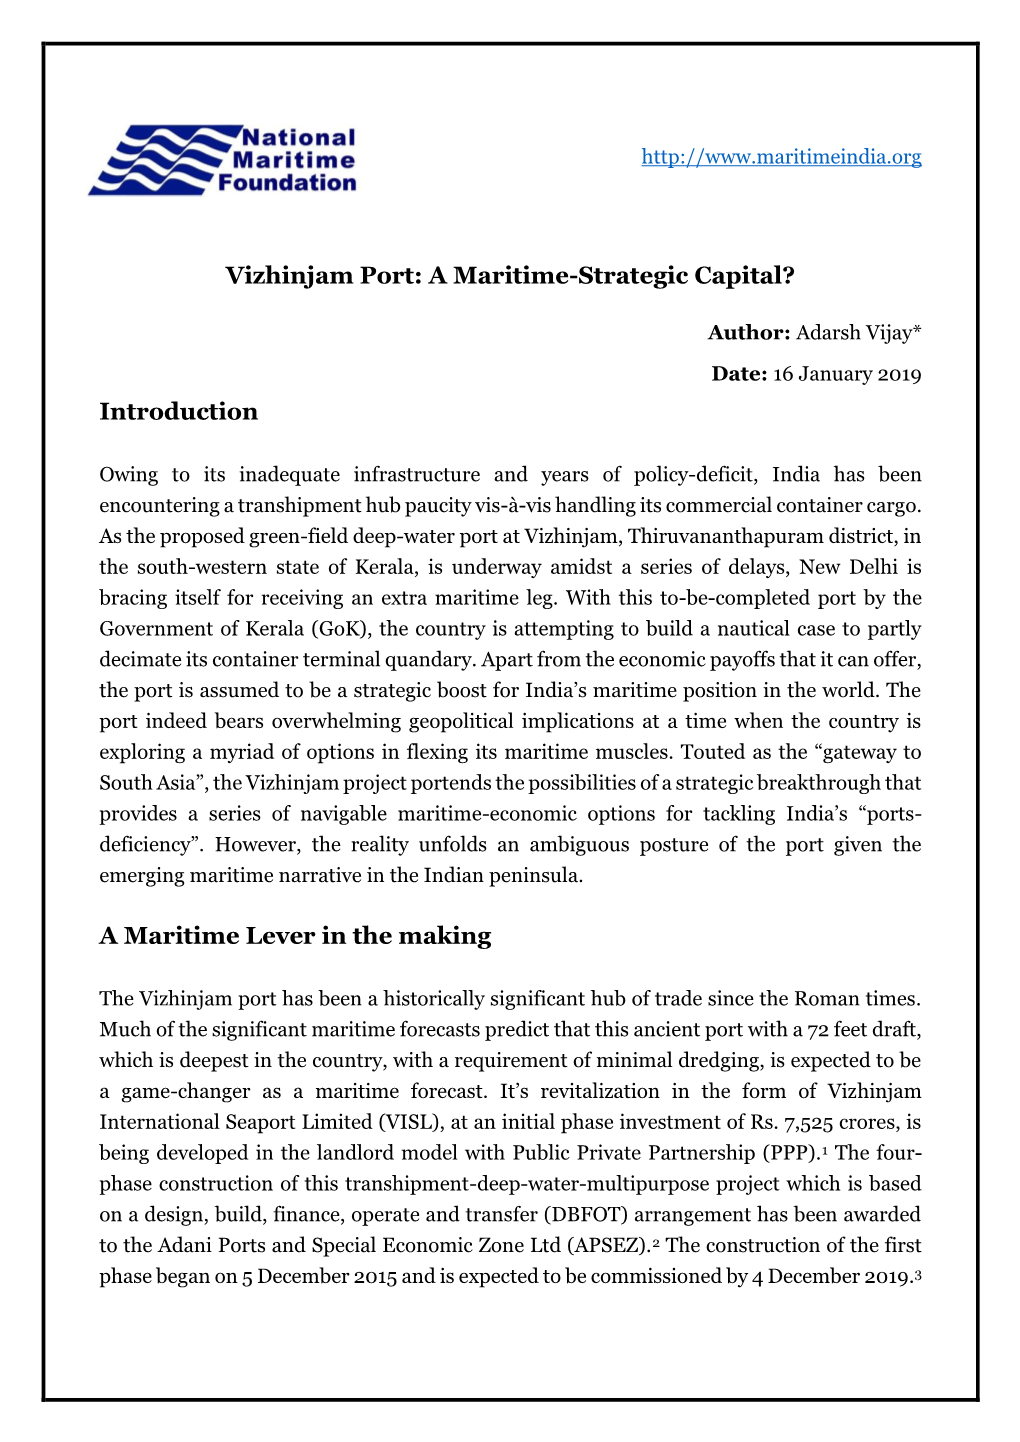 Vizhinjam Port: a Maritime-Strategic Capital?